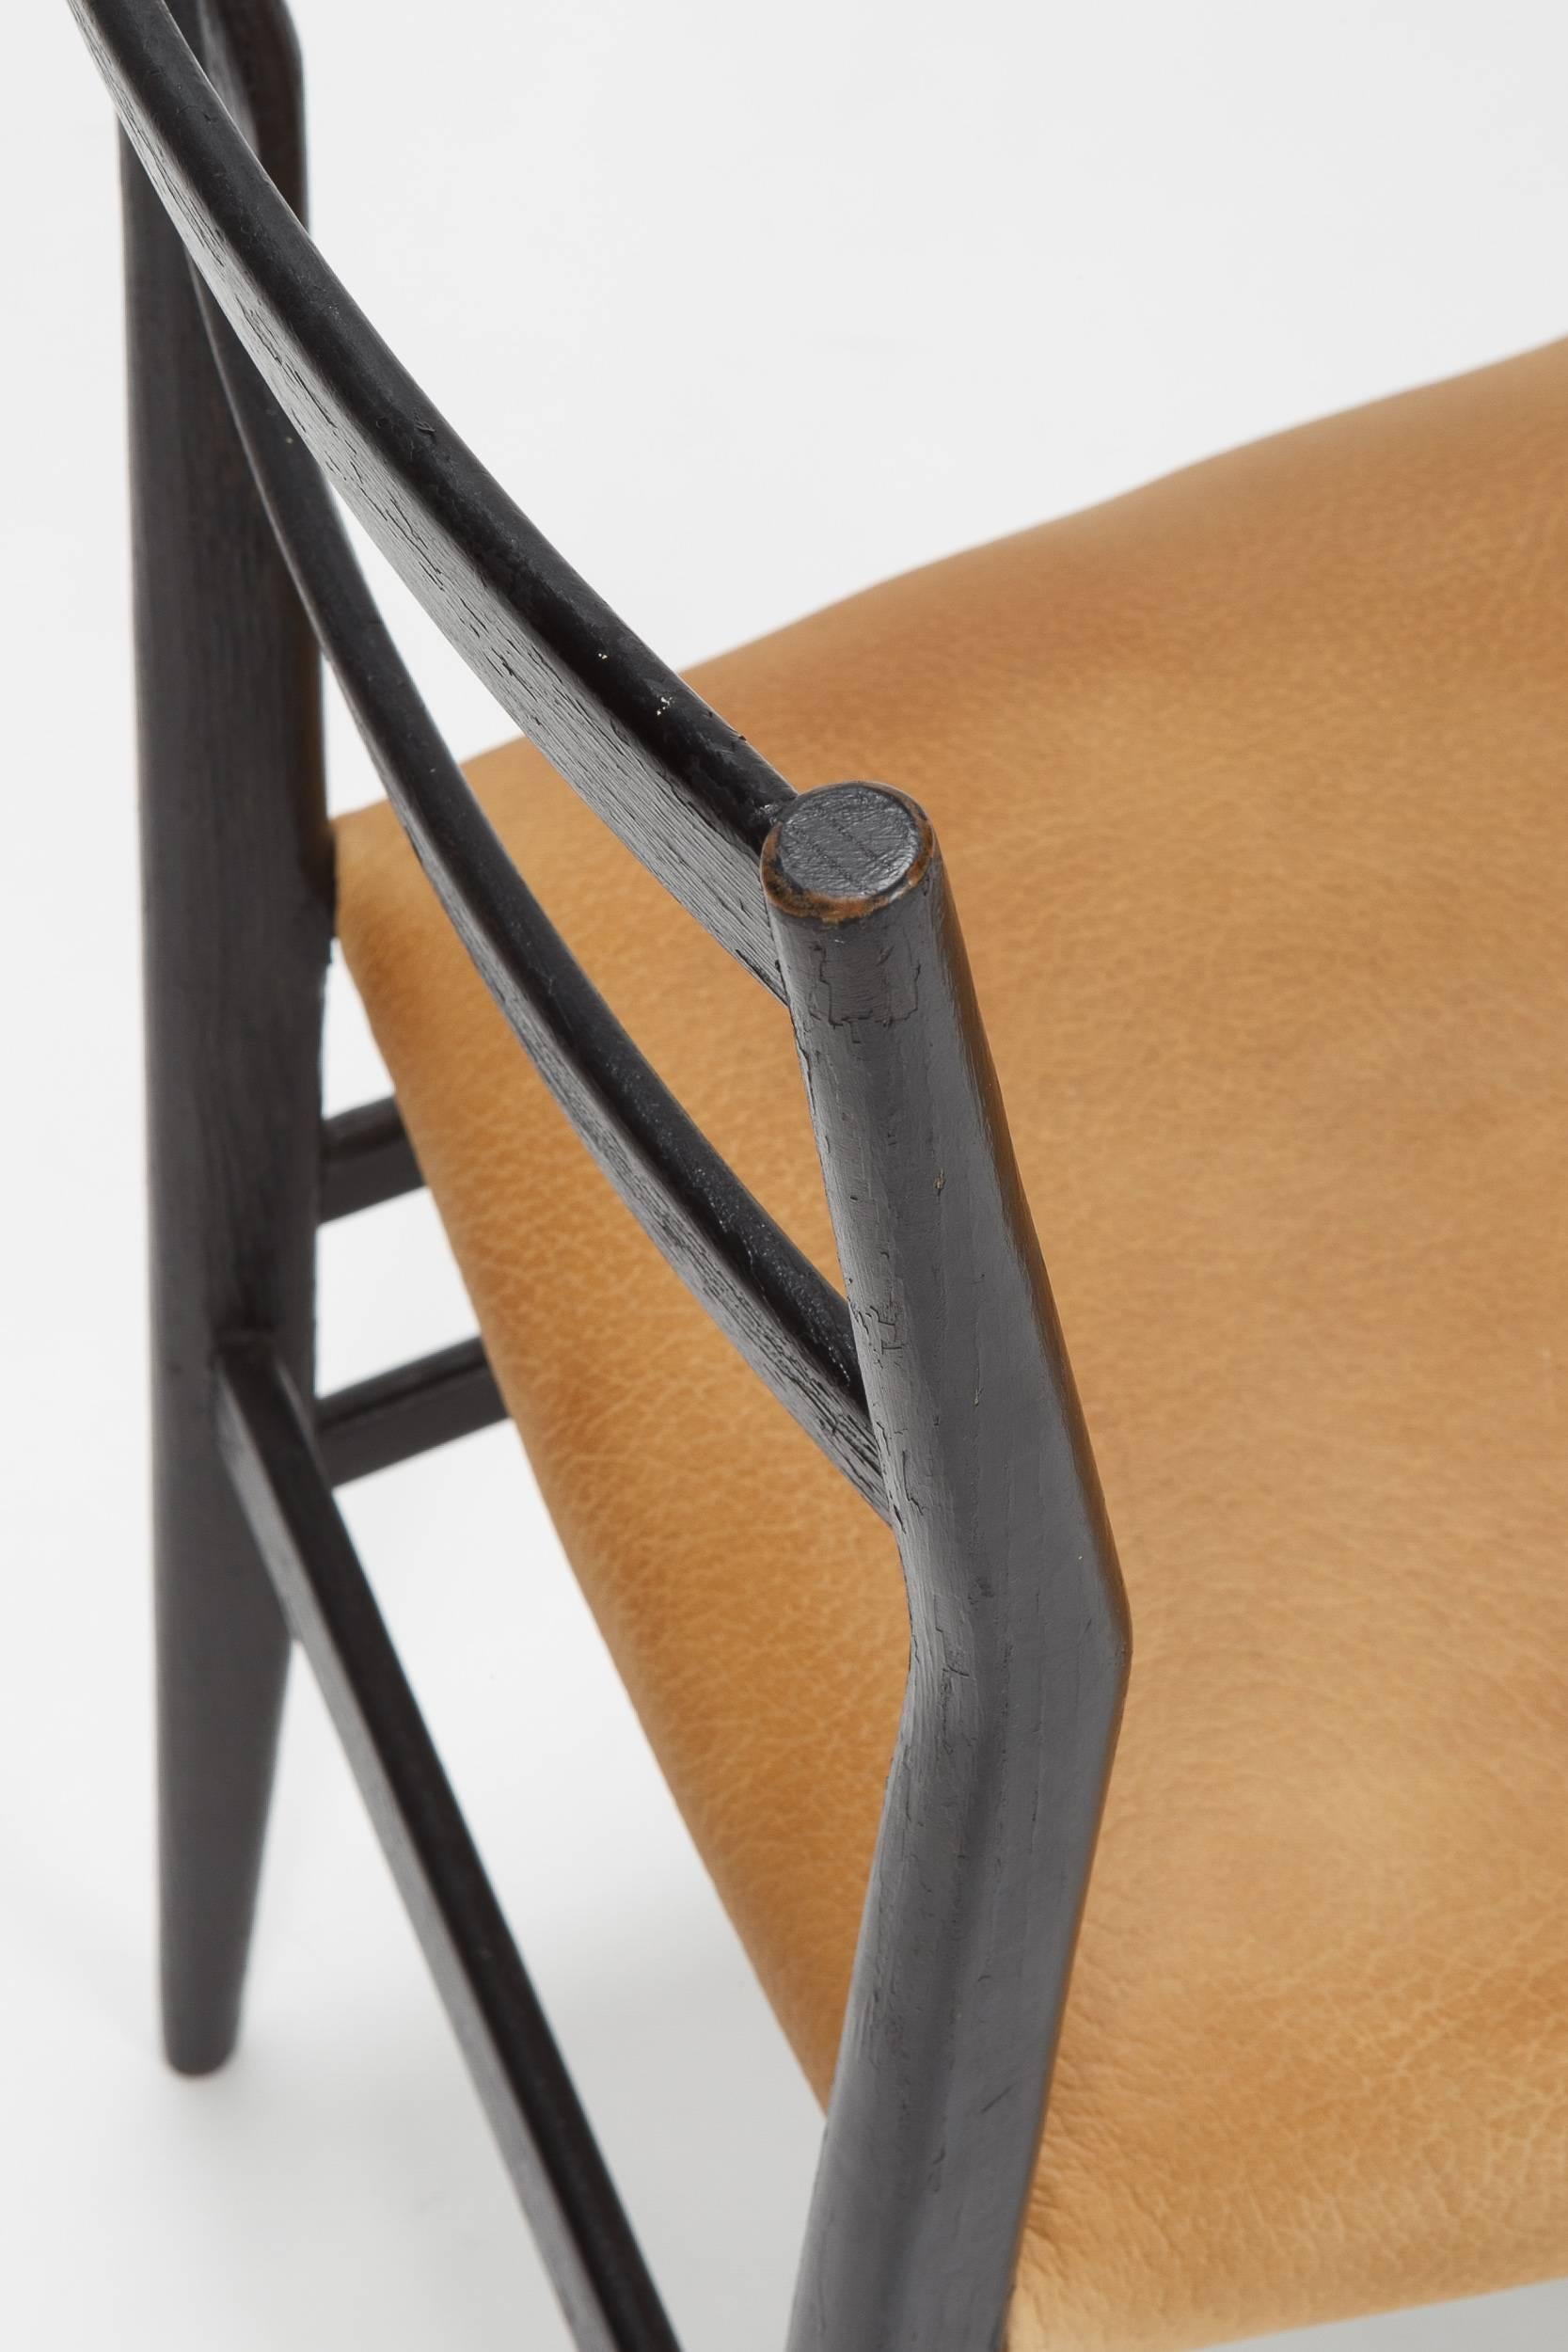 Leather 12 Gio Ponti Leggera Cassina Chairs, 1950s